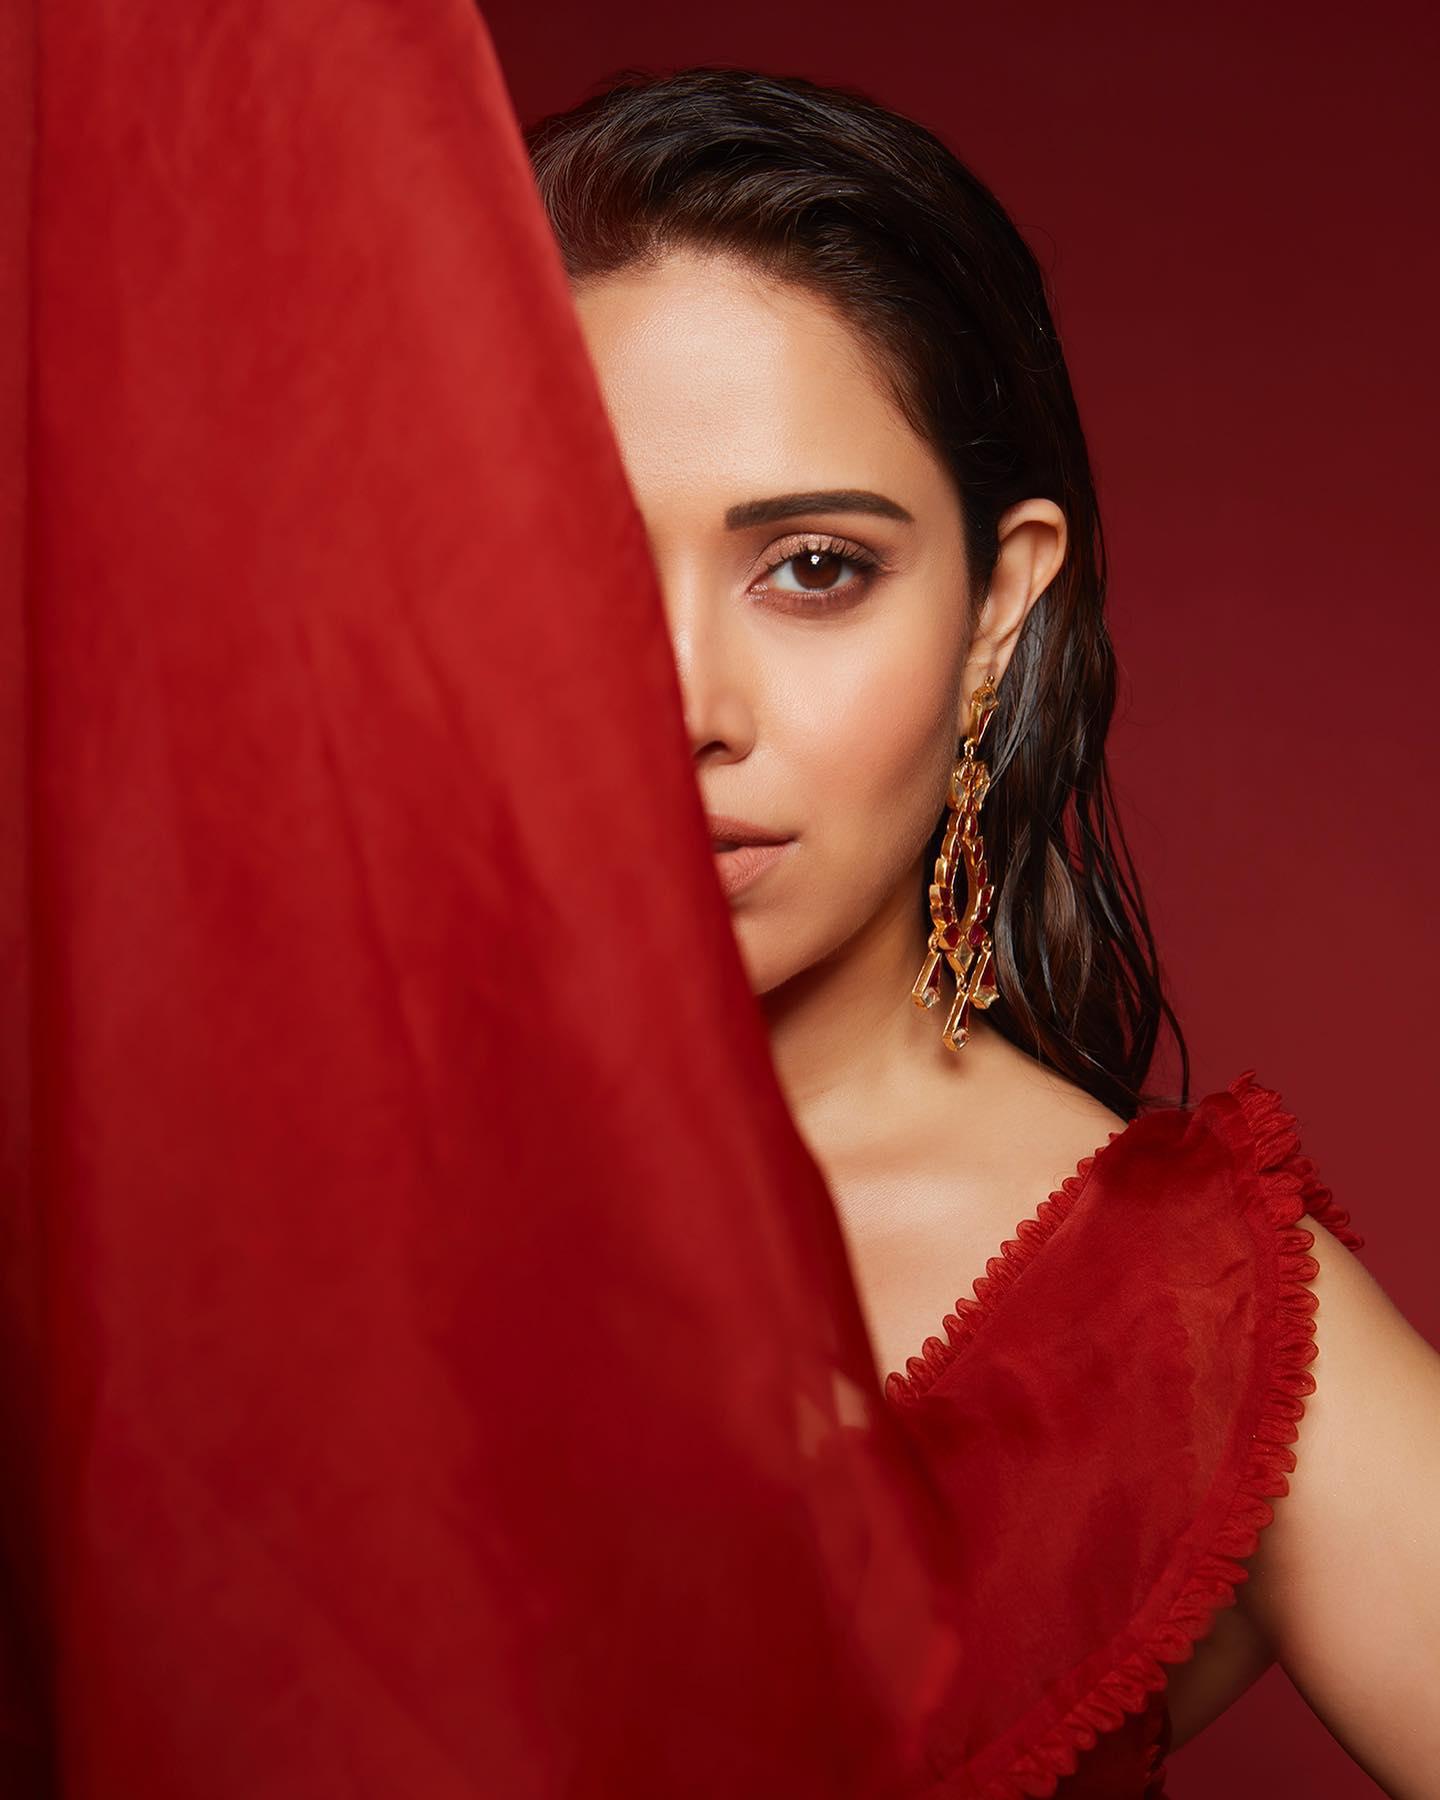 Nushrratt Bharuccha Portrait Photoshoot in Red Dress, April 2022